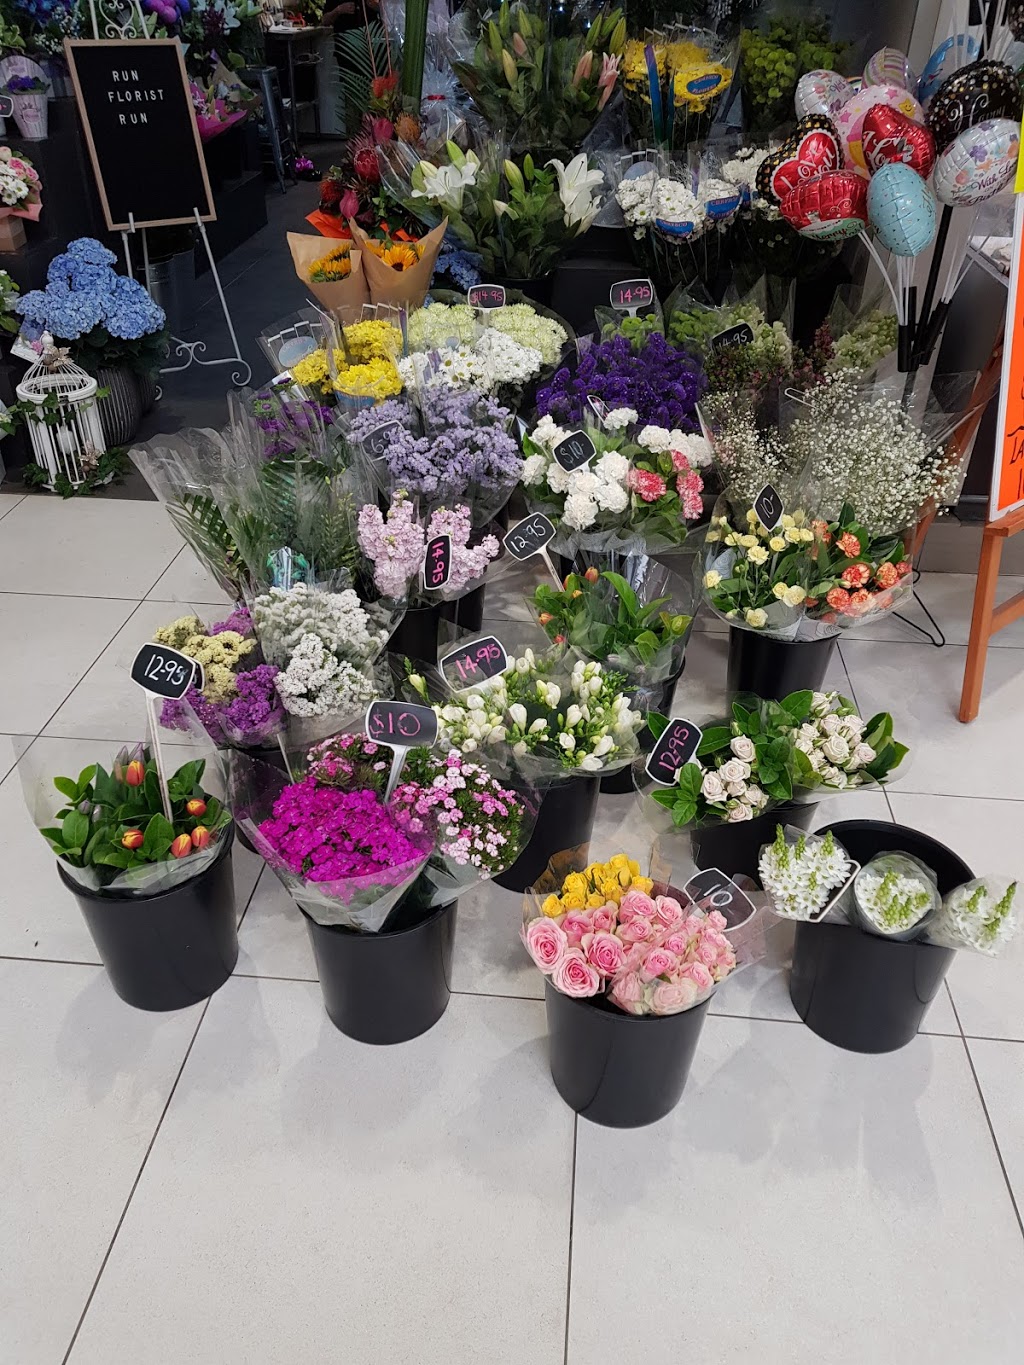 Greystanes Floral Art | florist | shop 10a/699 Merrylands Rd, Greystanes NSW 2145, Australia | 0296884386 OR +61 2 9688 4386